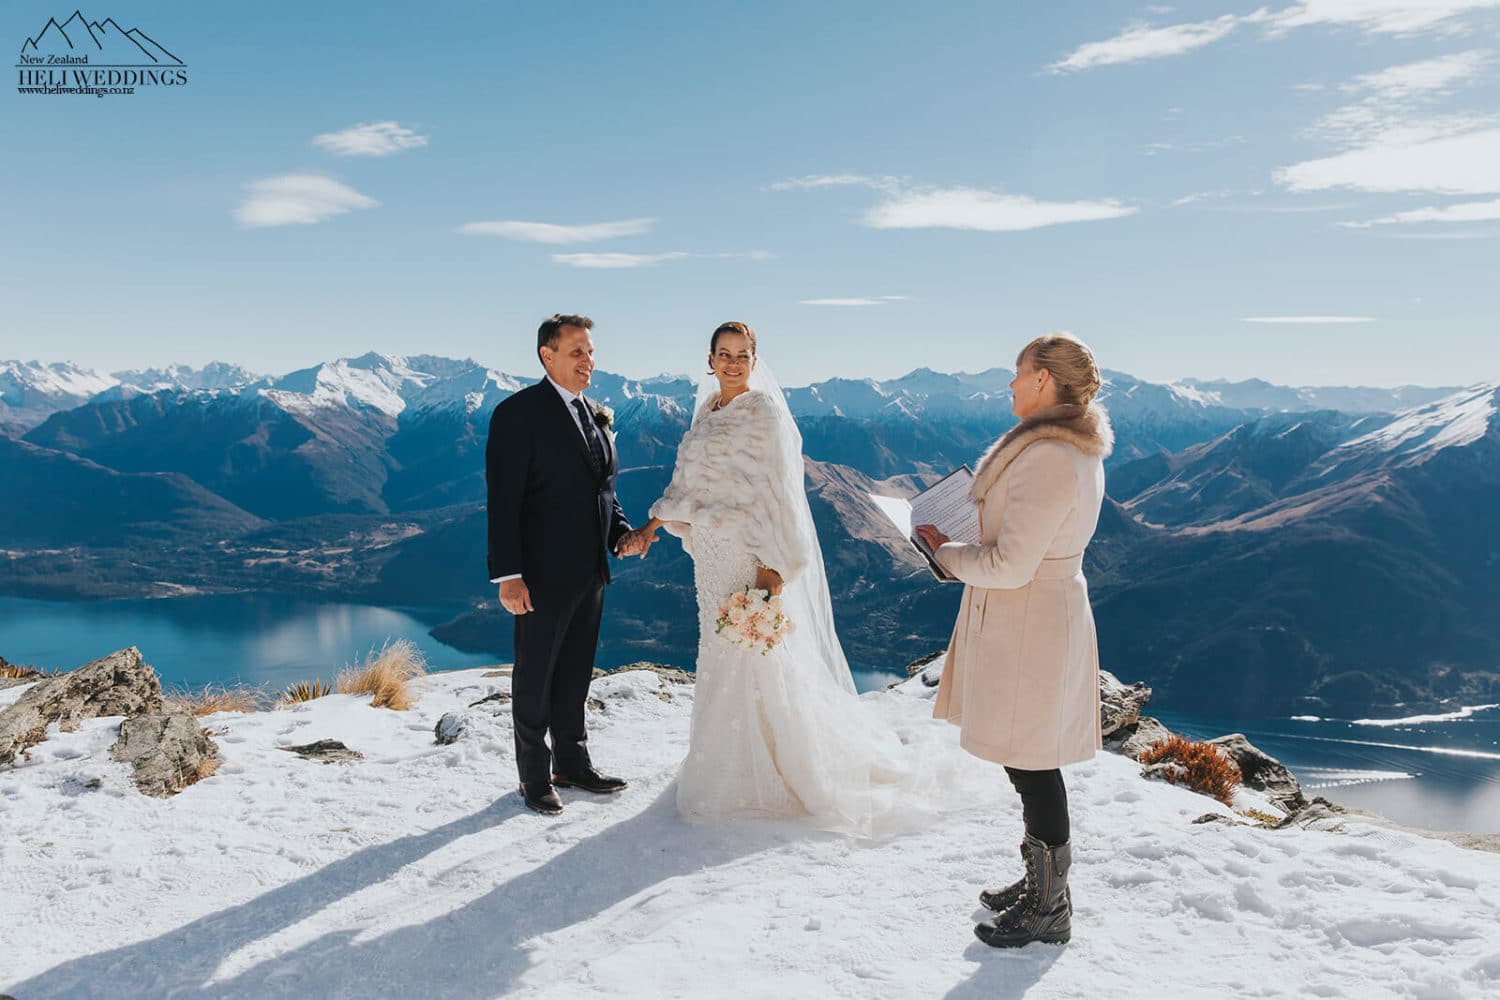 Winter wedding ceremony in the snow